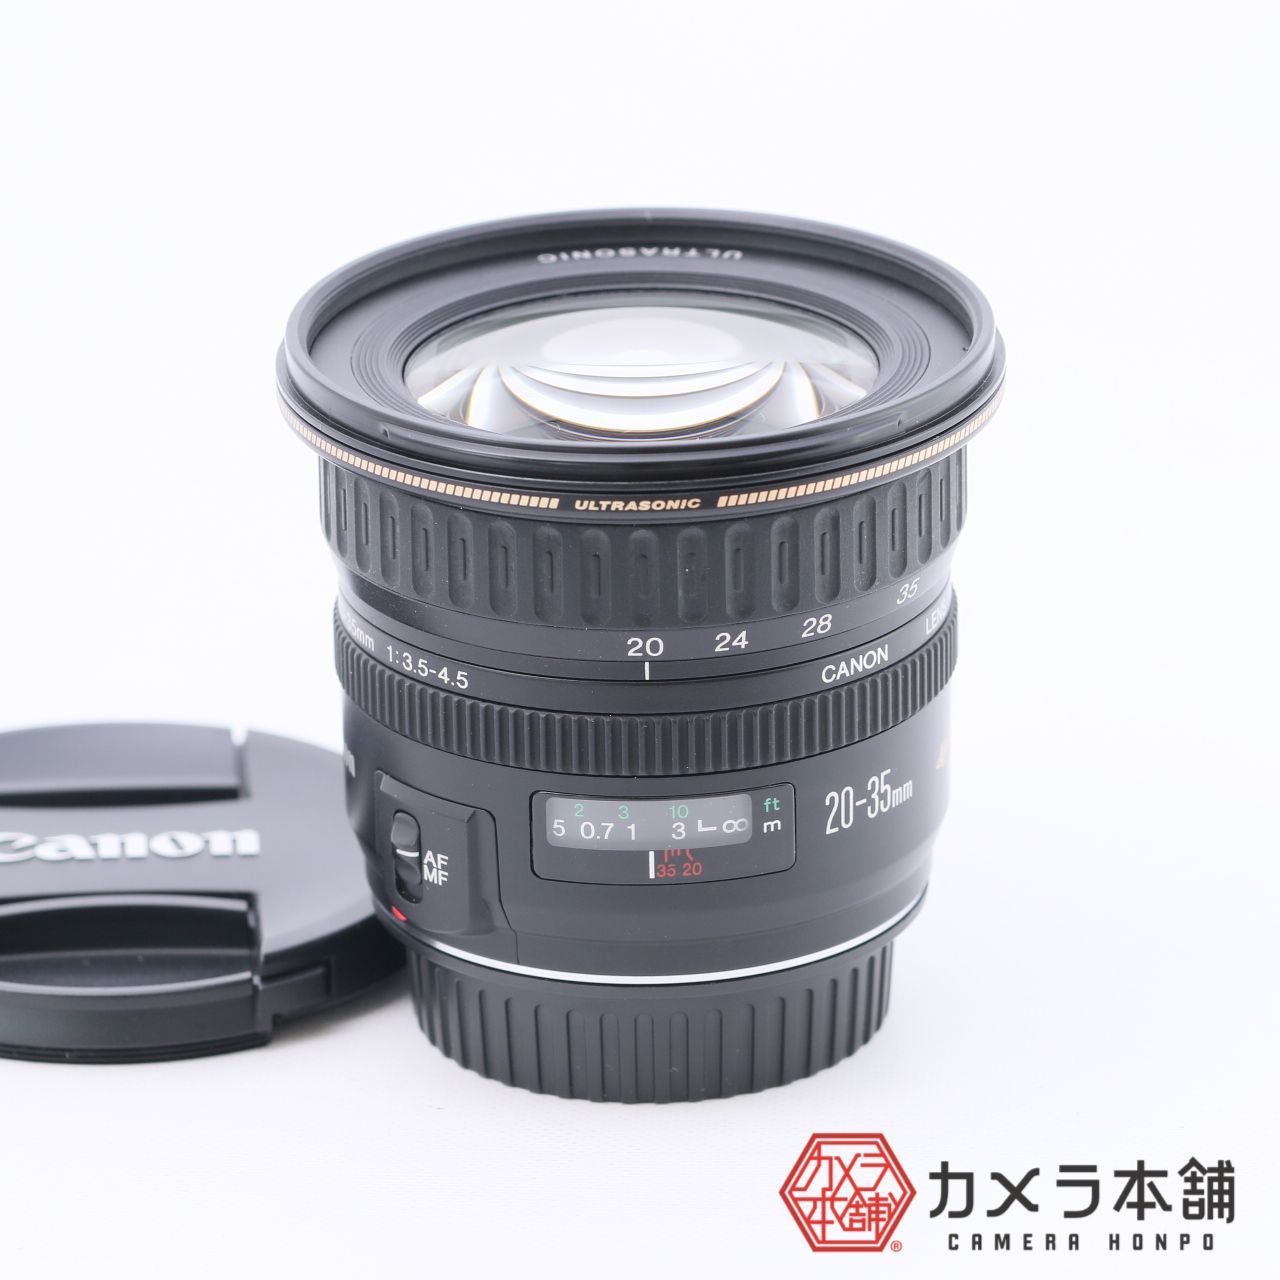 Canon EF 20-35mm F3.5-4.5 USM♥️超広角レンズリンcamera